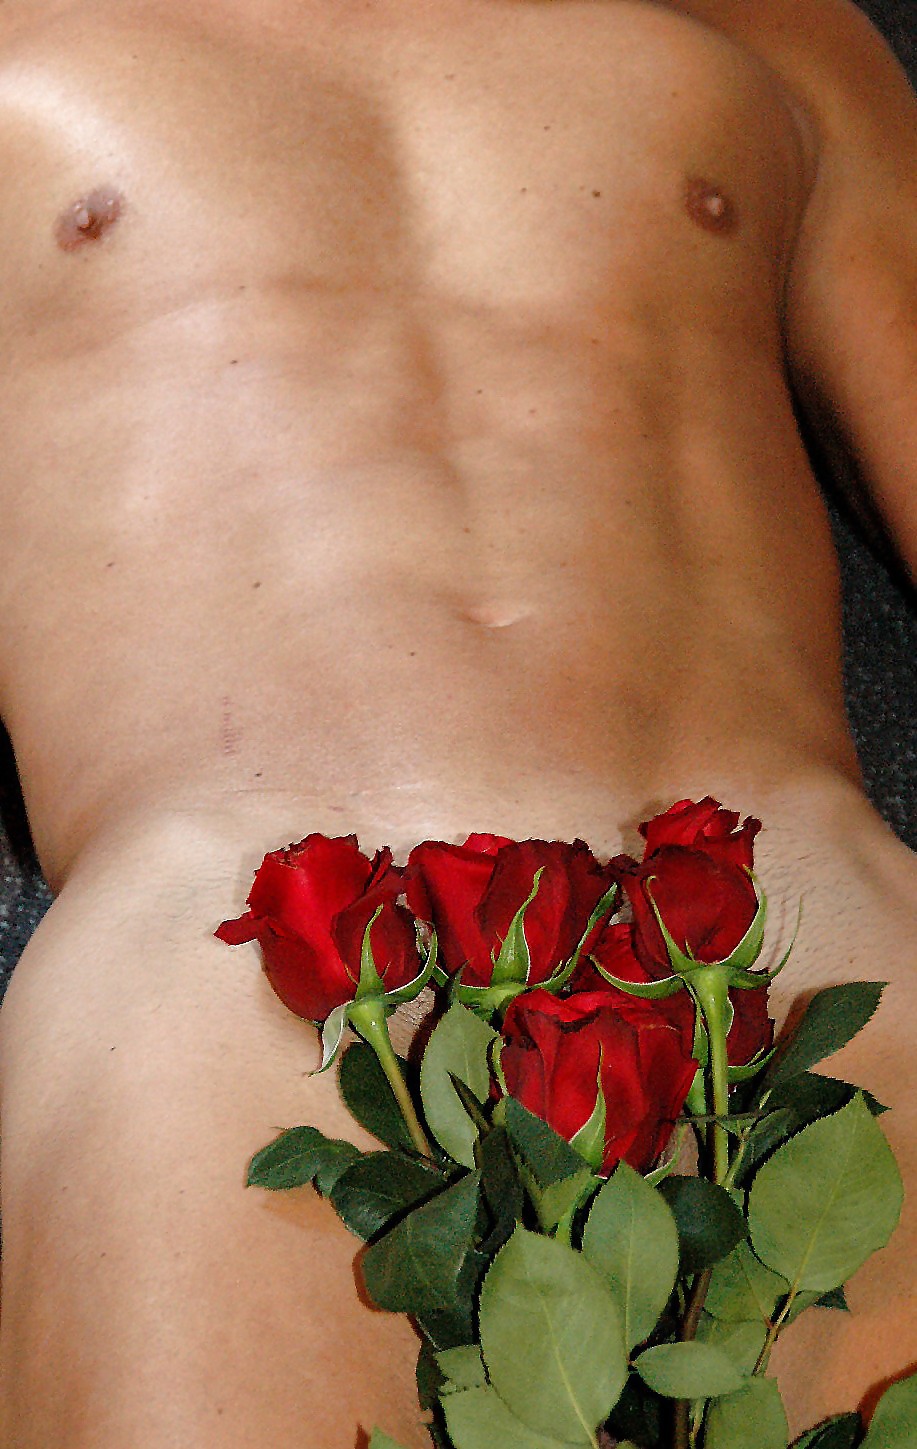 Erotic Art of Roses - Session 2 #4232247